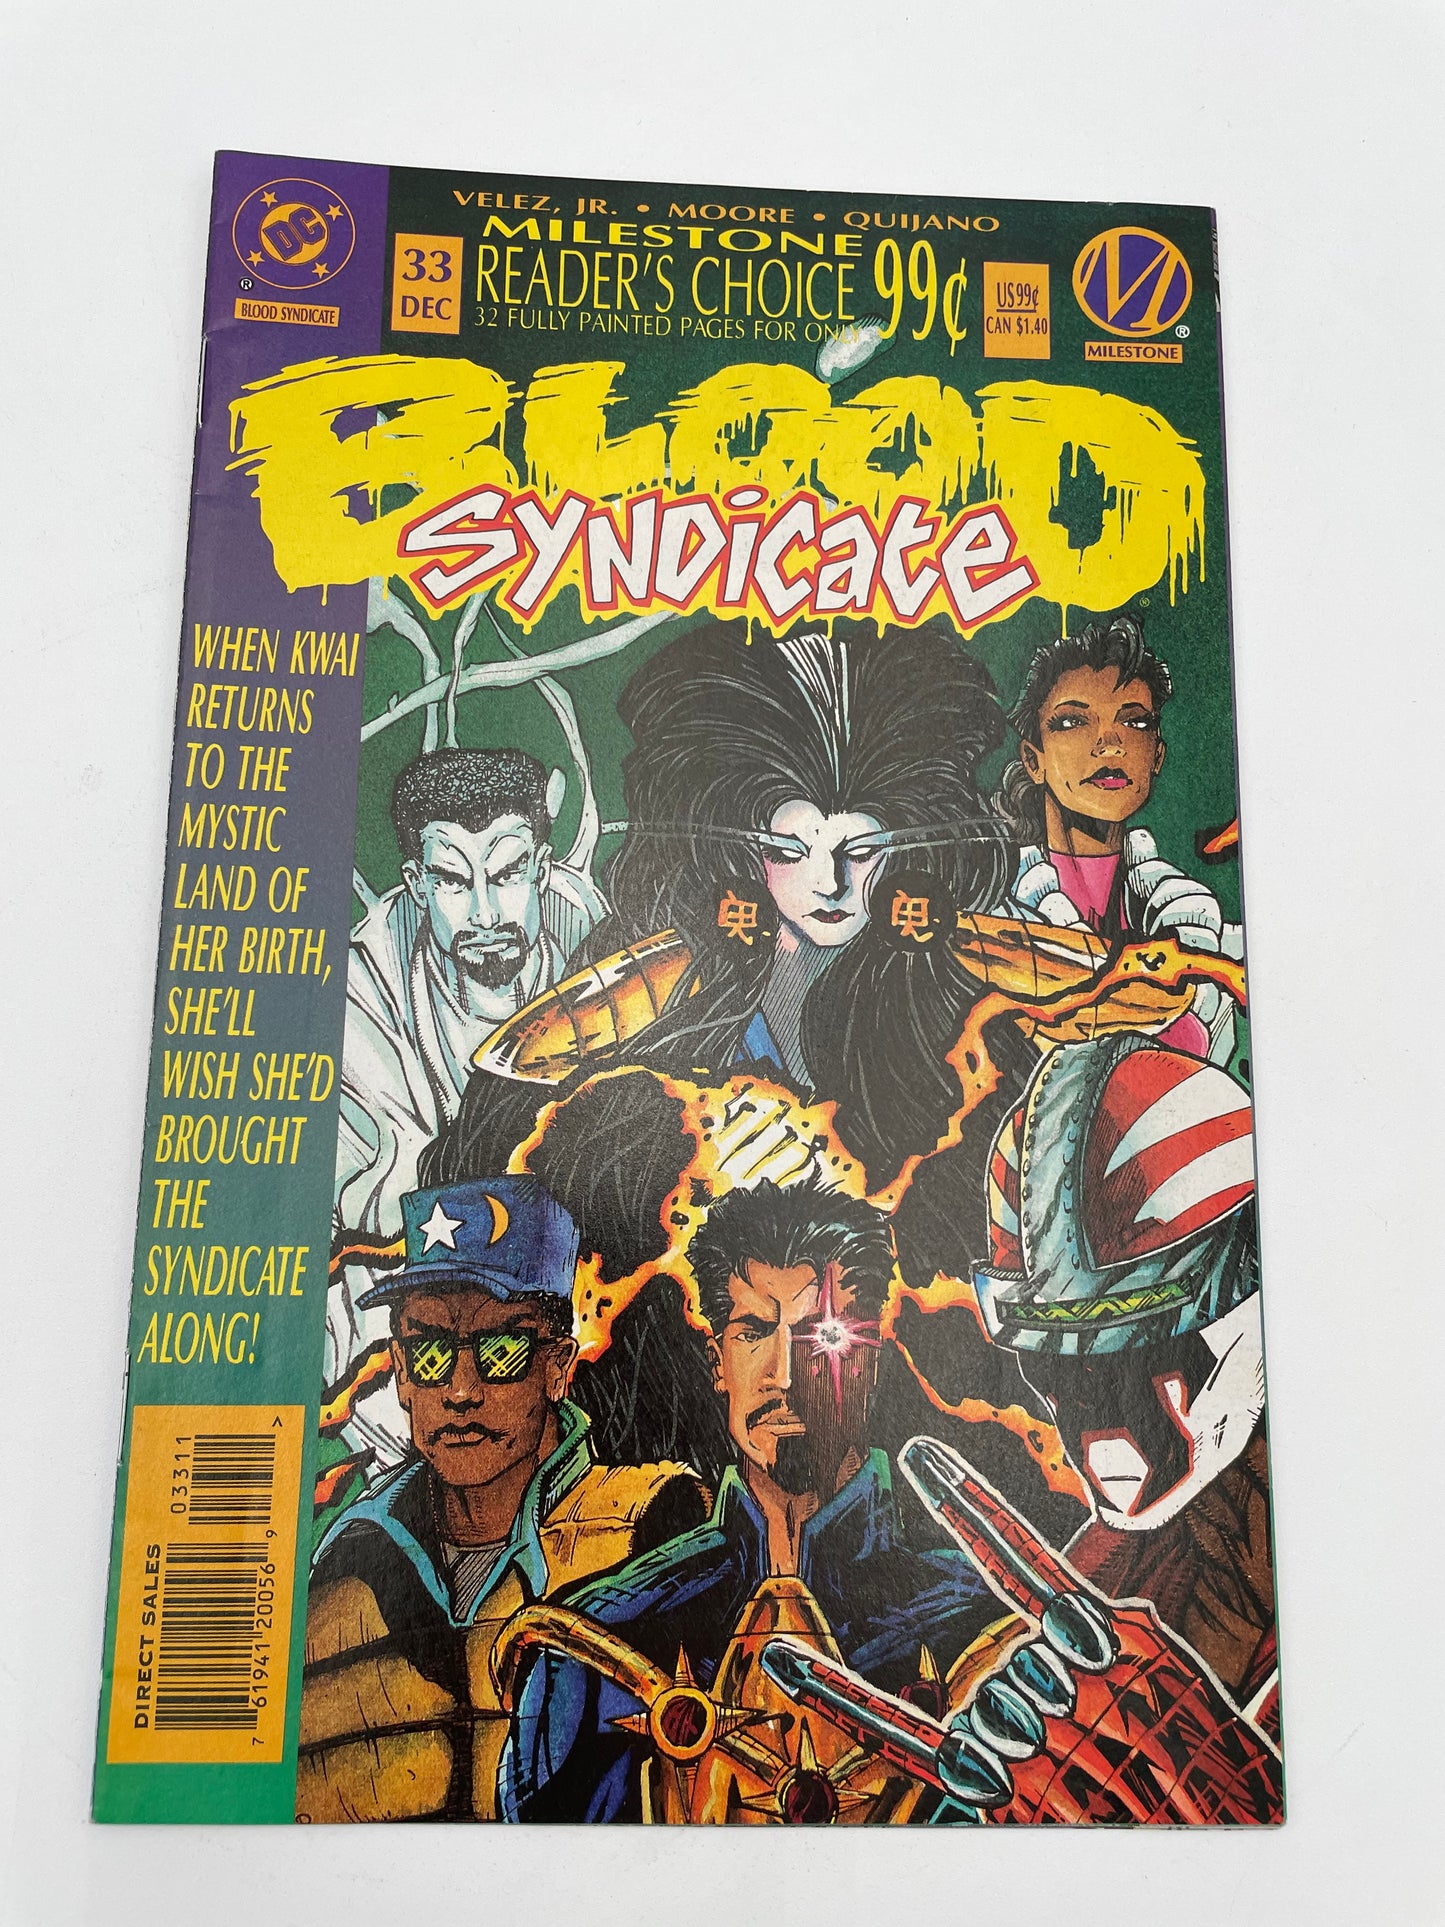 DC Comics - Blood Syndicate #33 December 1995 #102323